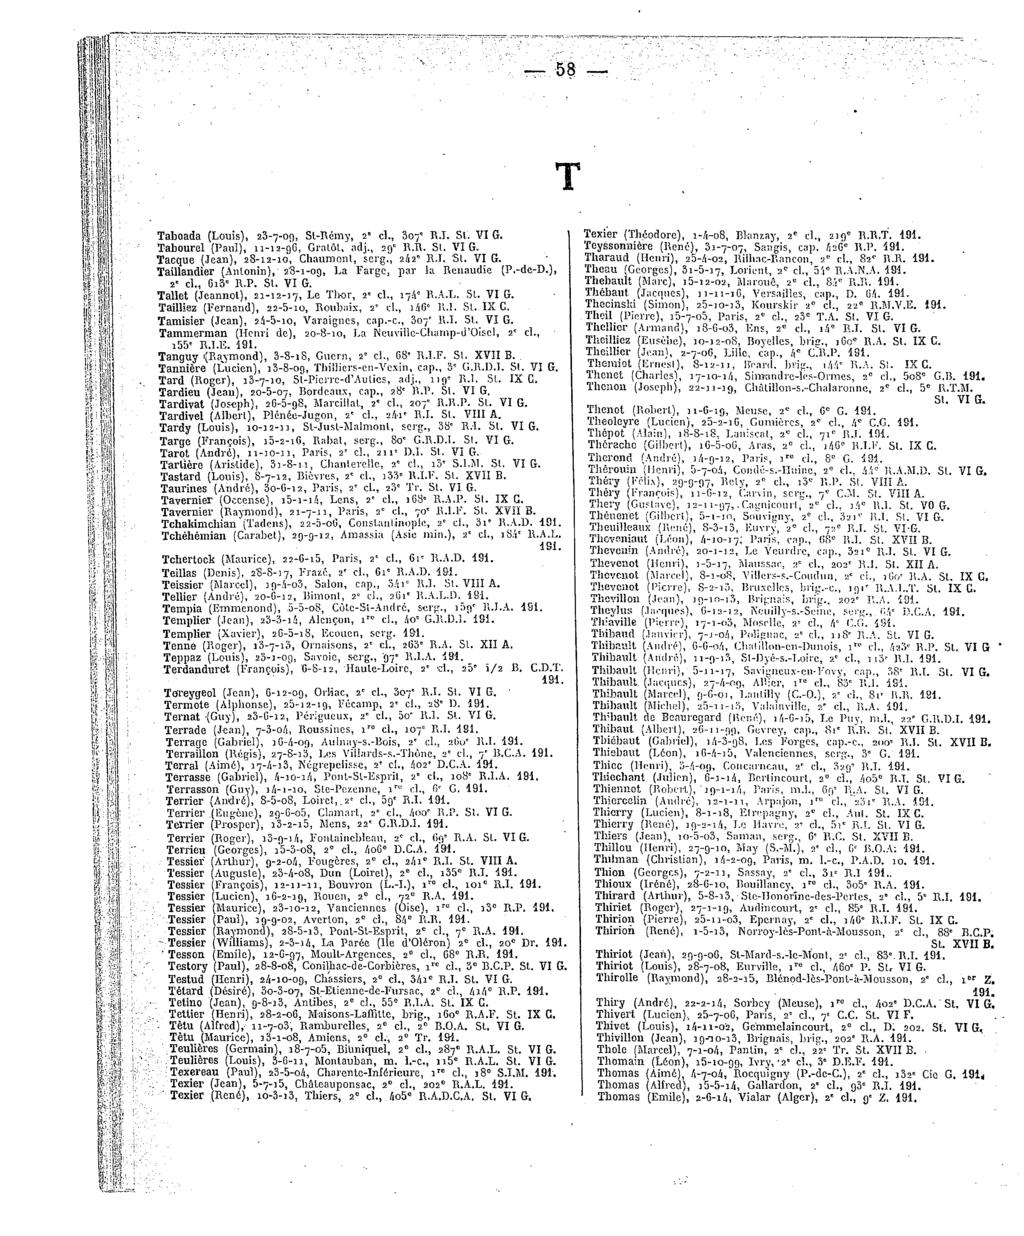 T Taboada 23-7-09, Sl-Rémy, 2 cl.,307"r.i.si.vig. Texier(Théodore), 1-/1-08, Blanzay, 2ecl.,219"R.R.f. Tabourel (Paul),11-12-96, Gralôt," adj.,29"r.r. 'feyssonîiière (René), 31-7-07, Sangis, cap.